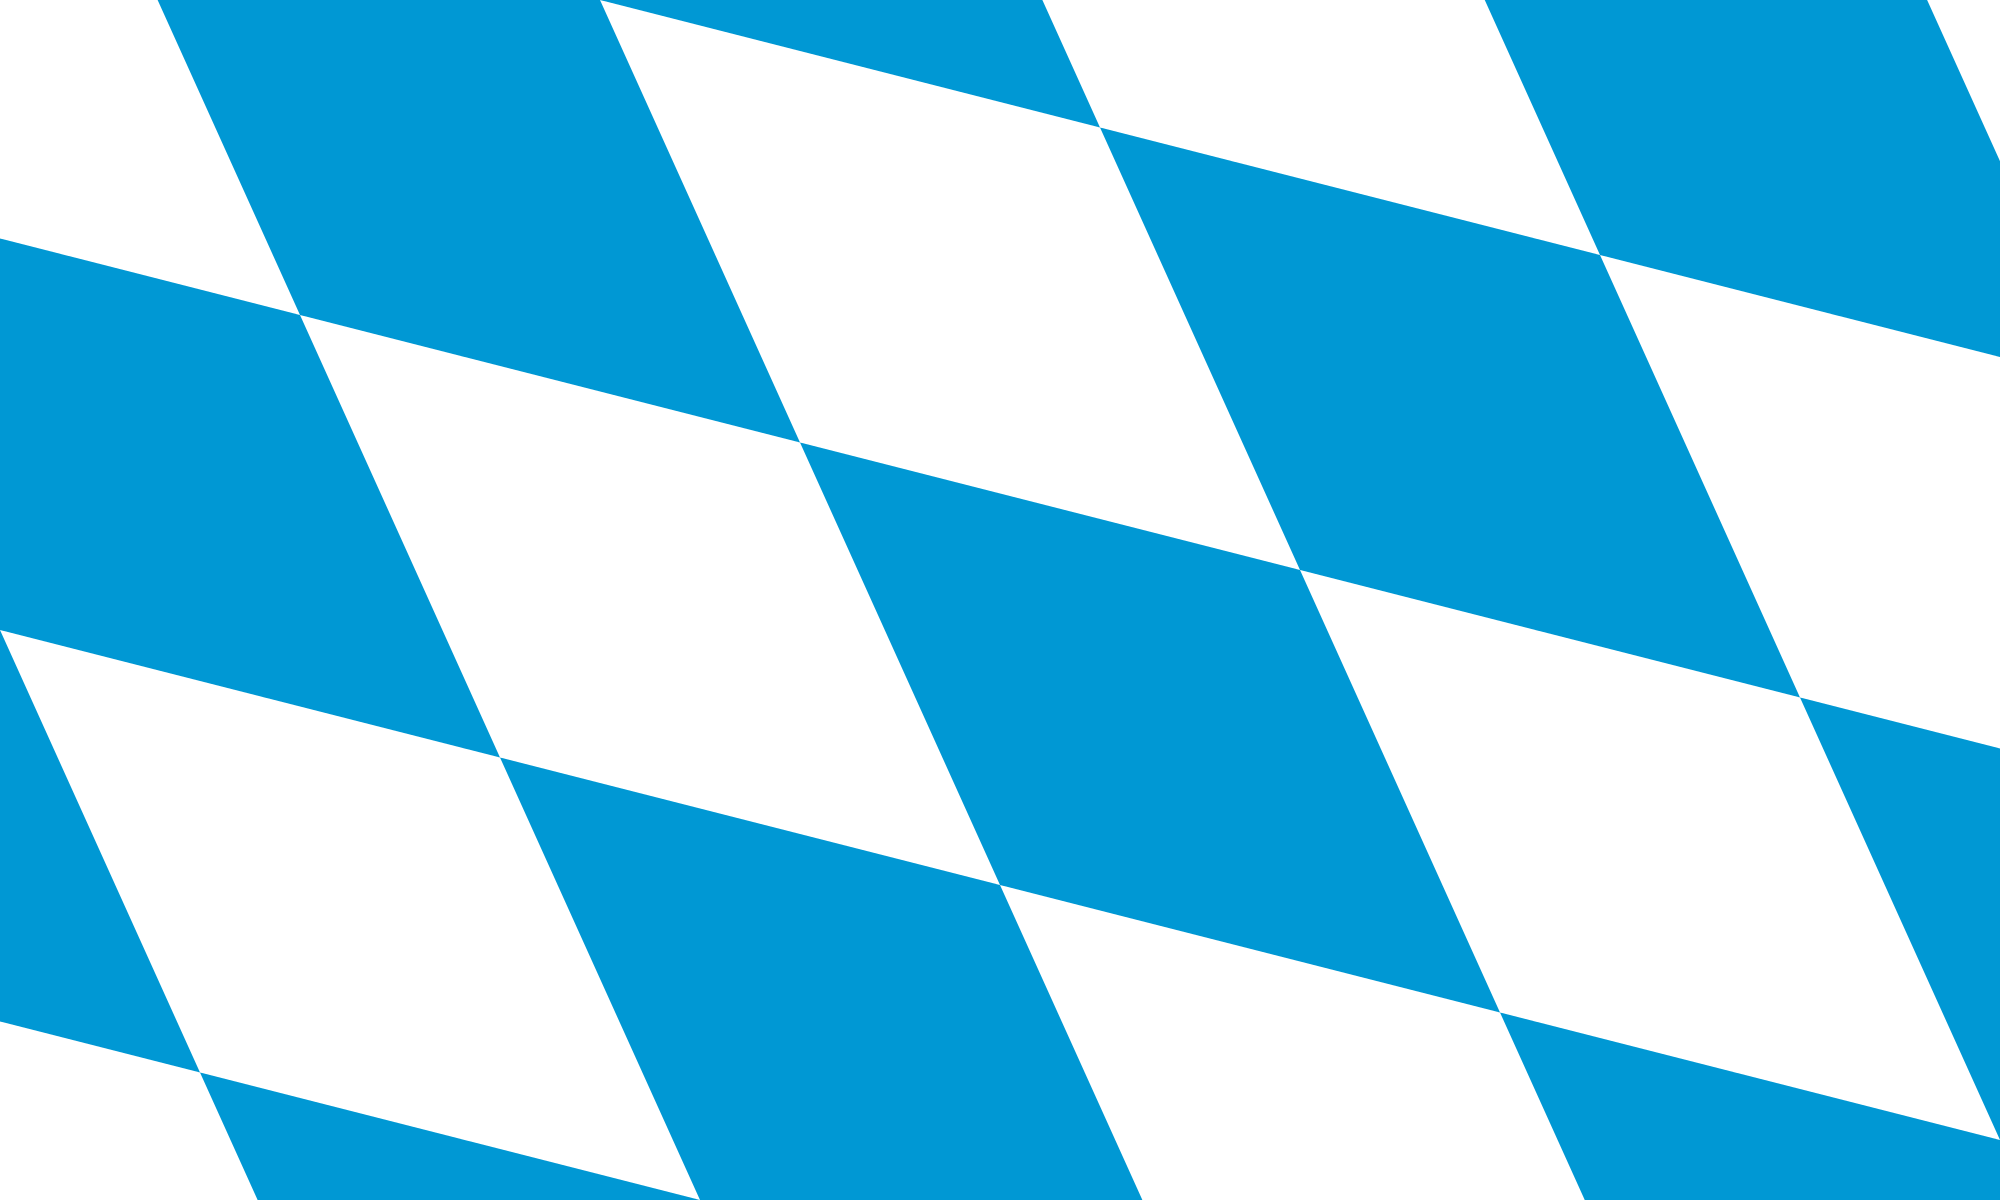 Bavaria - Wikipedia